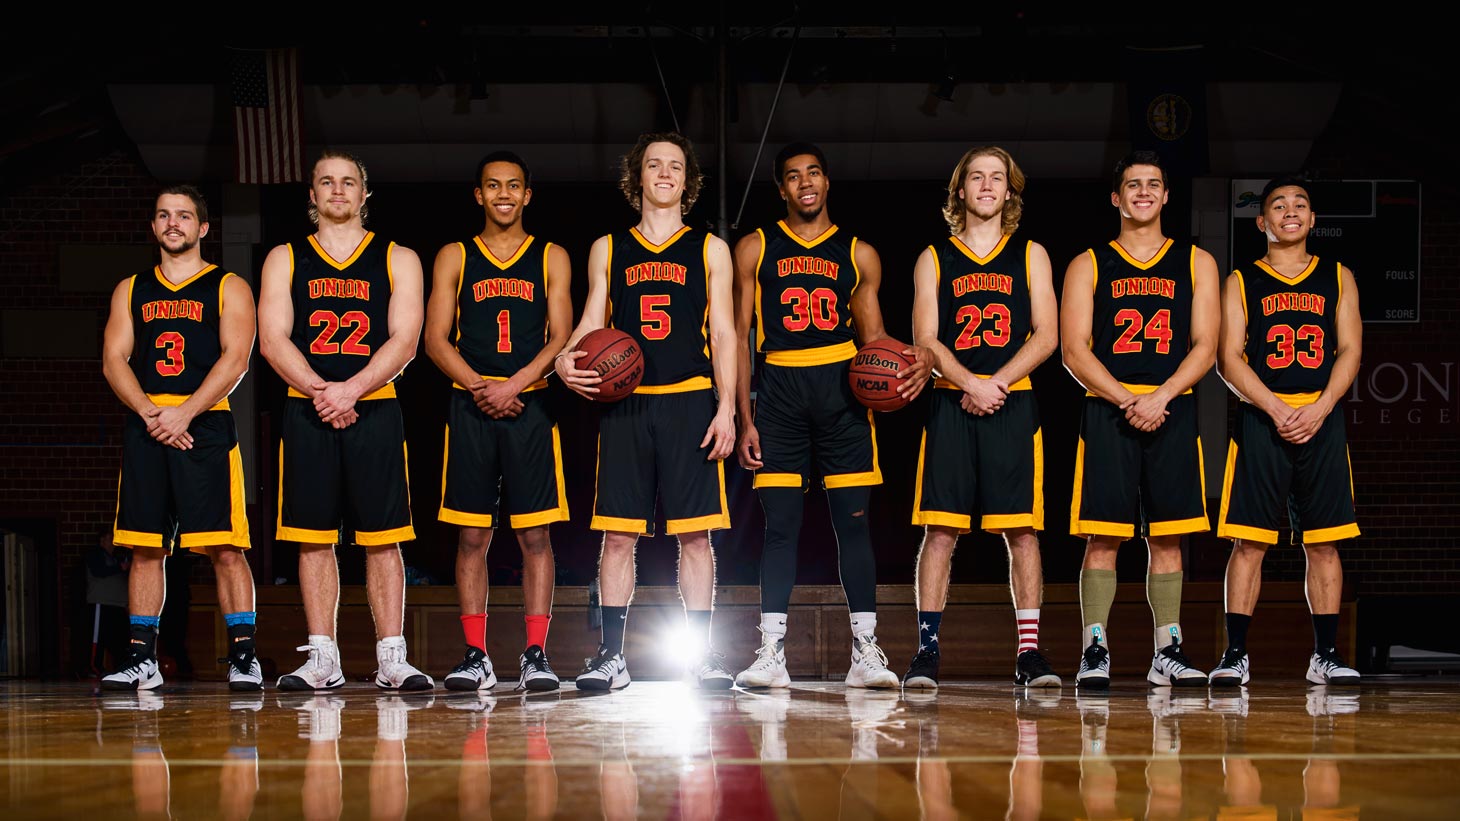 Union College basketball team